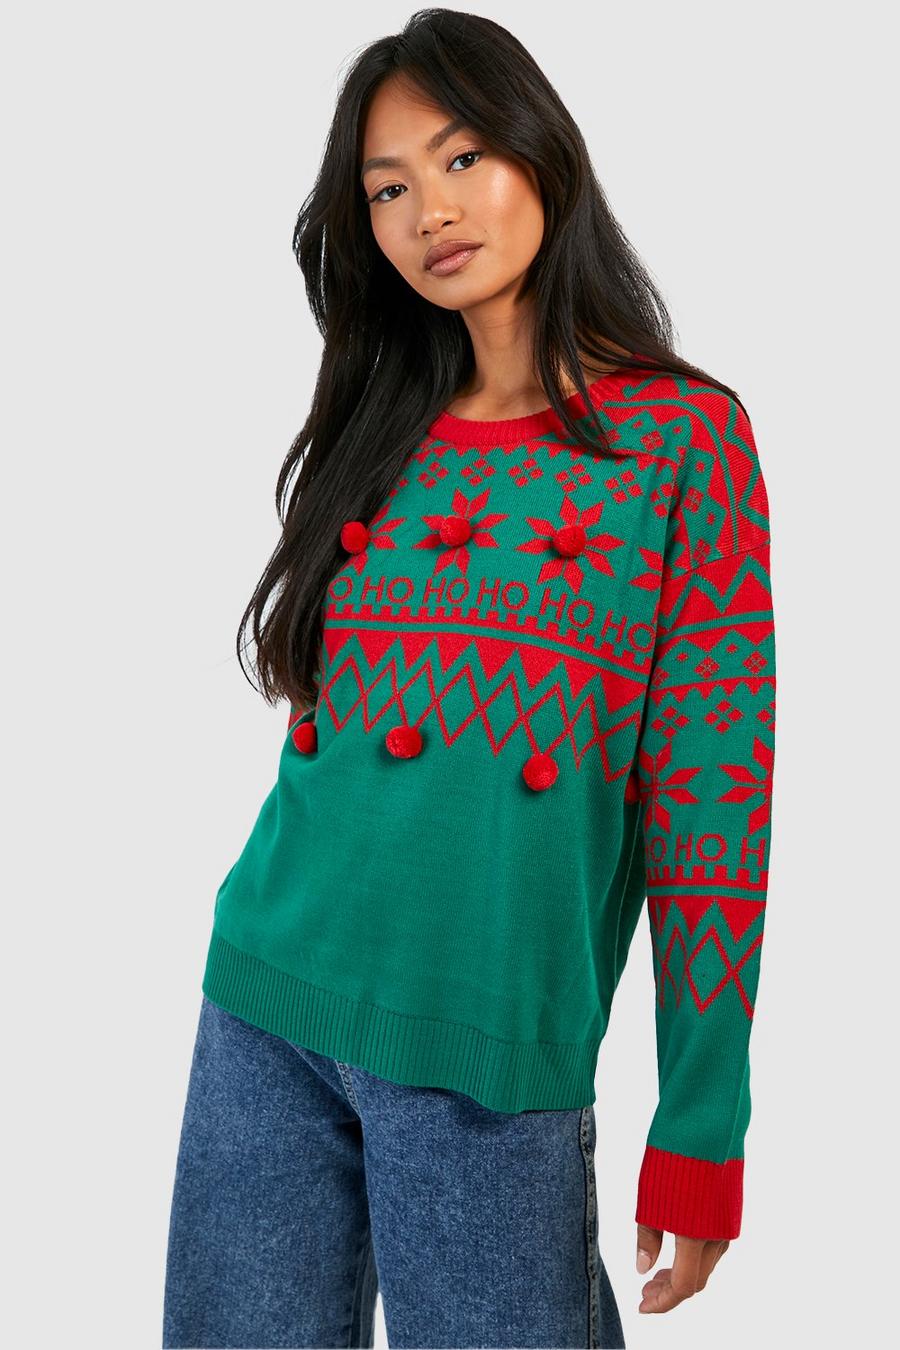 HoHoHo Weihnachtspullover mit Pom-Poms, Green vert